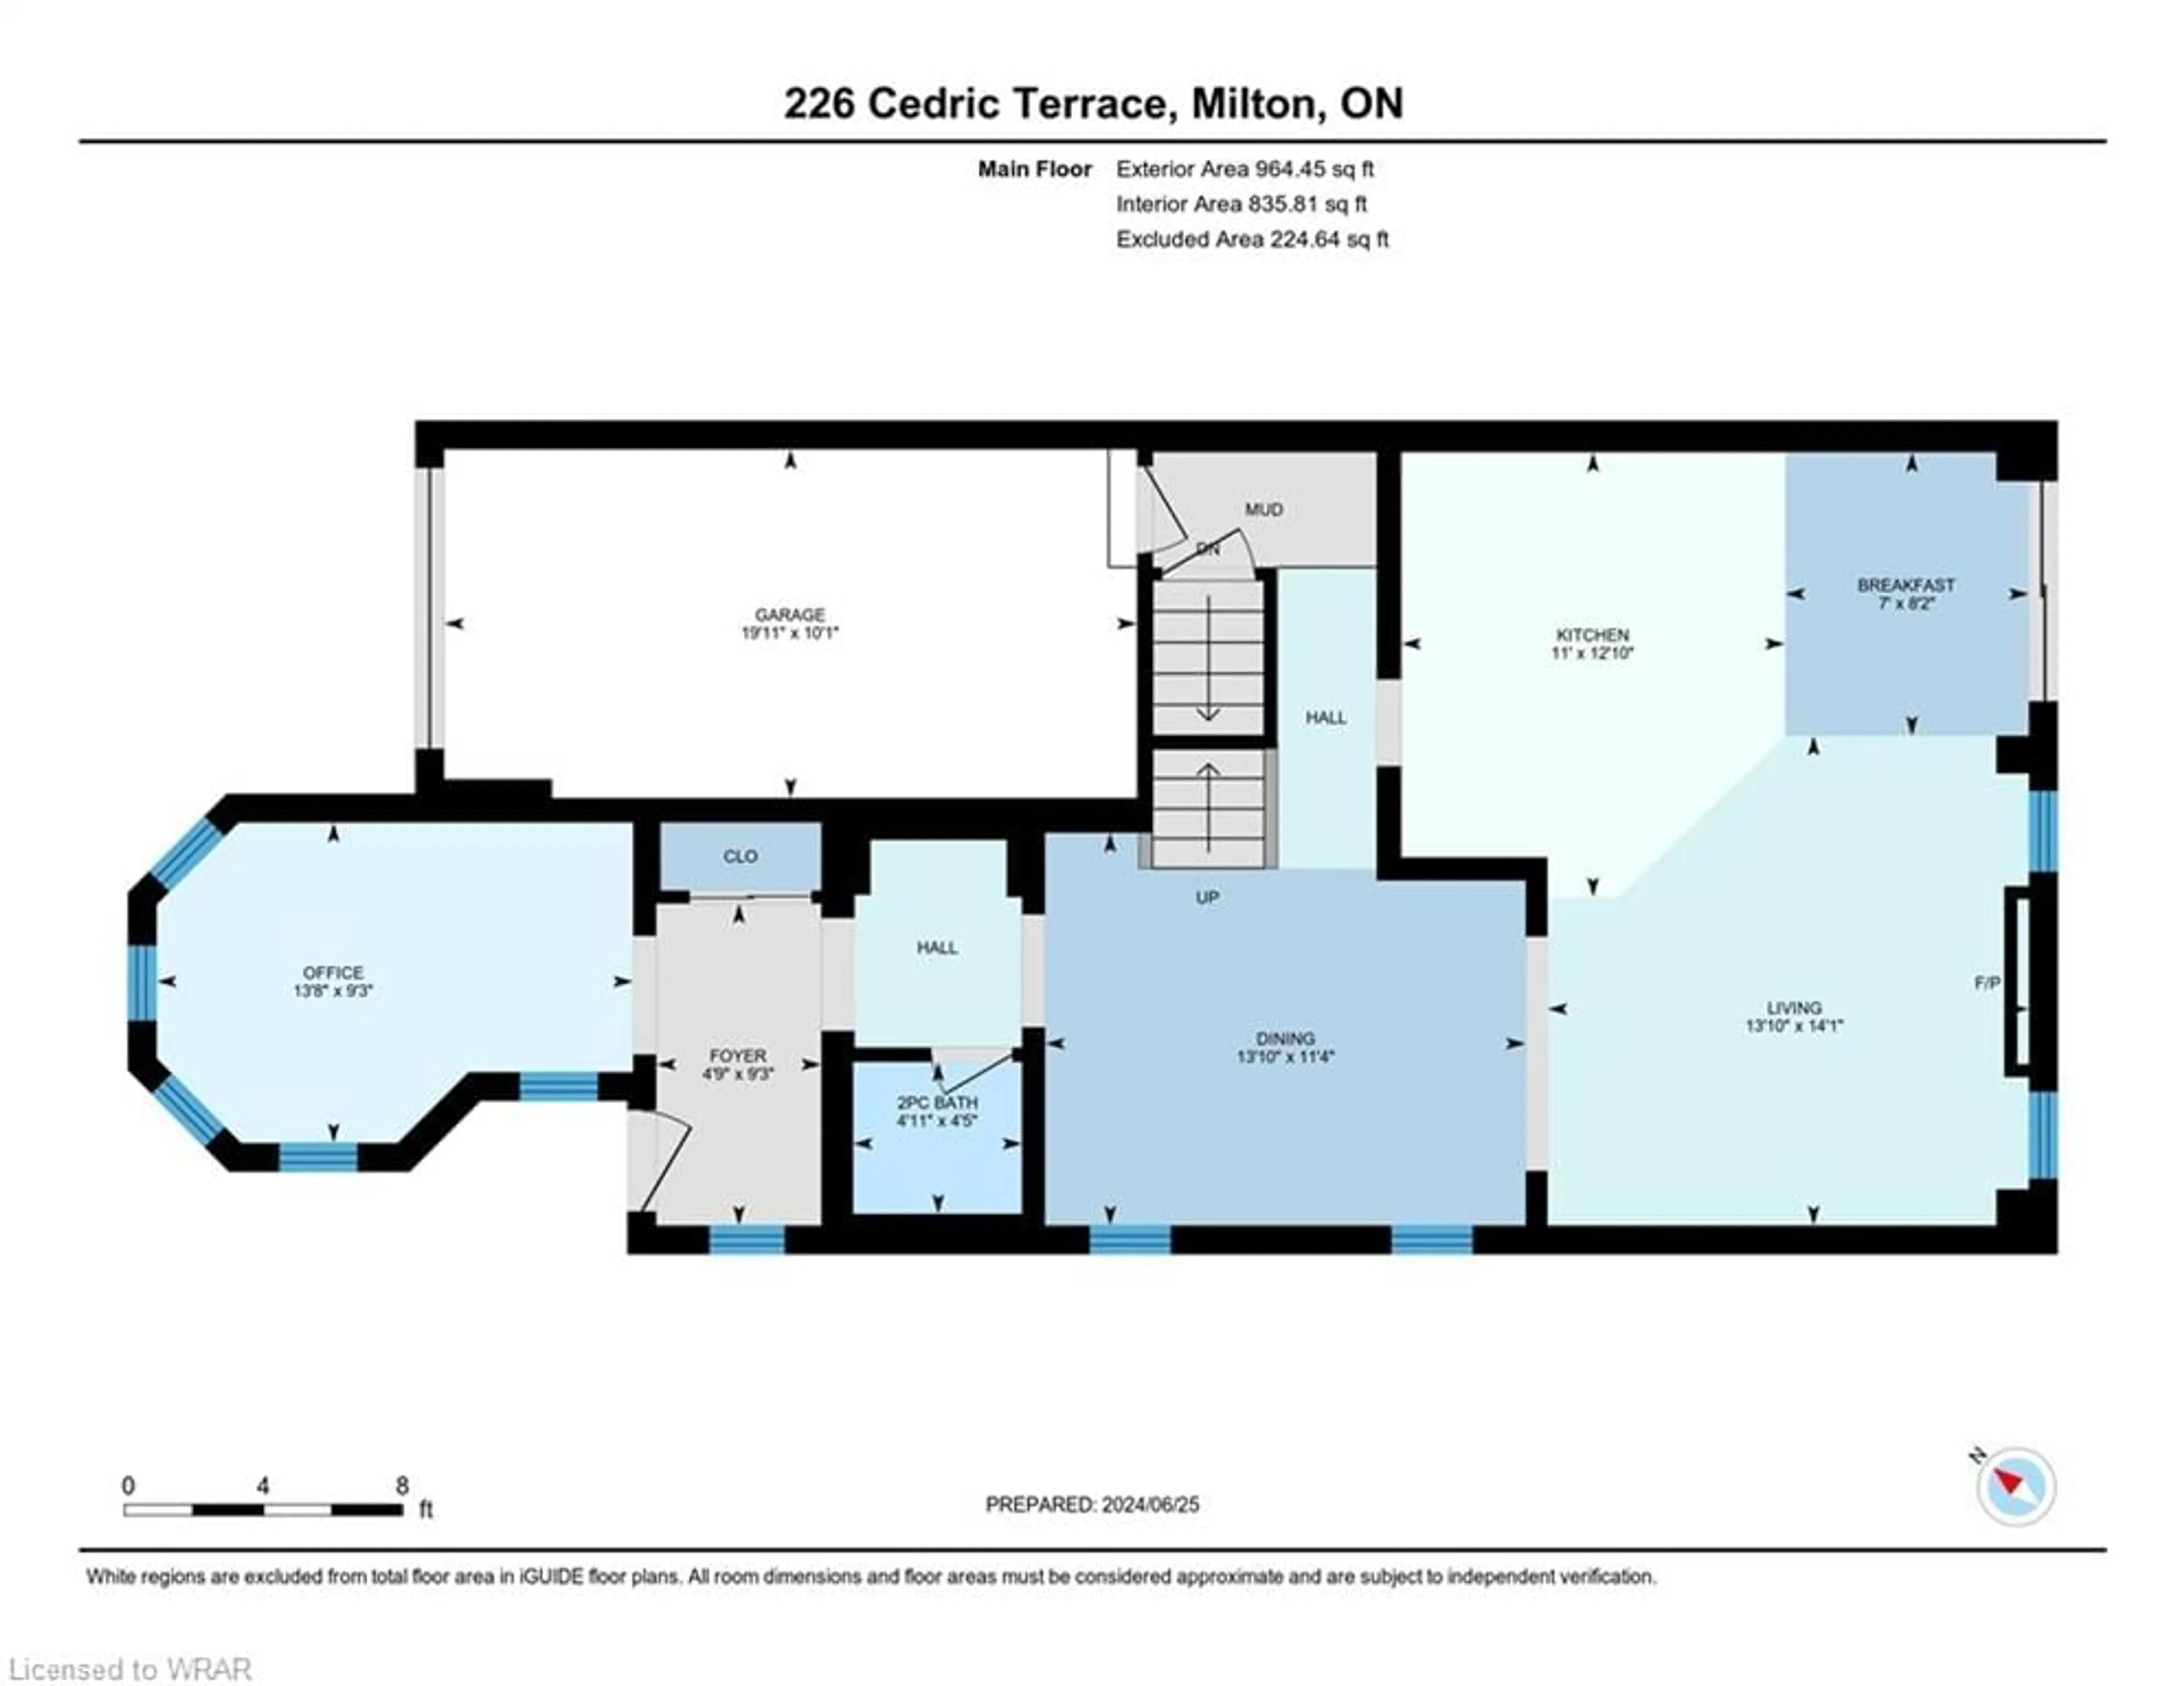 Floor plan for 226 Cedric Terr, Milton Ontario L9T 7B6